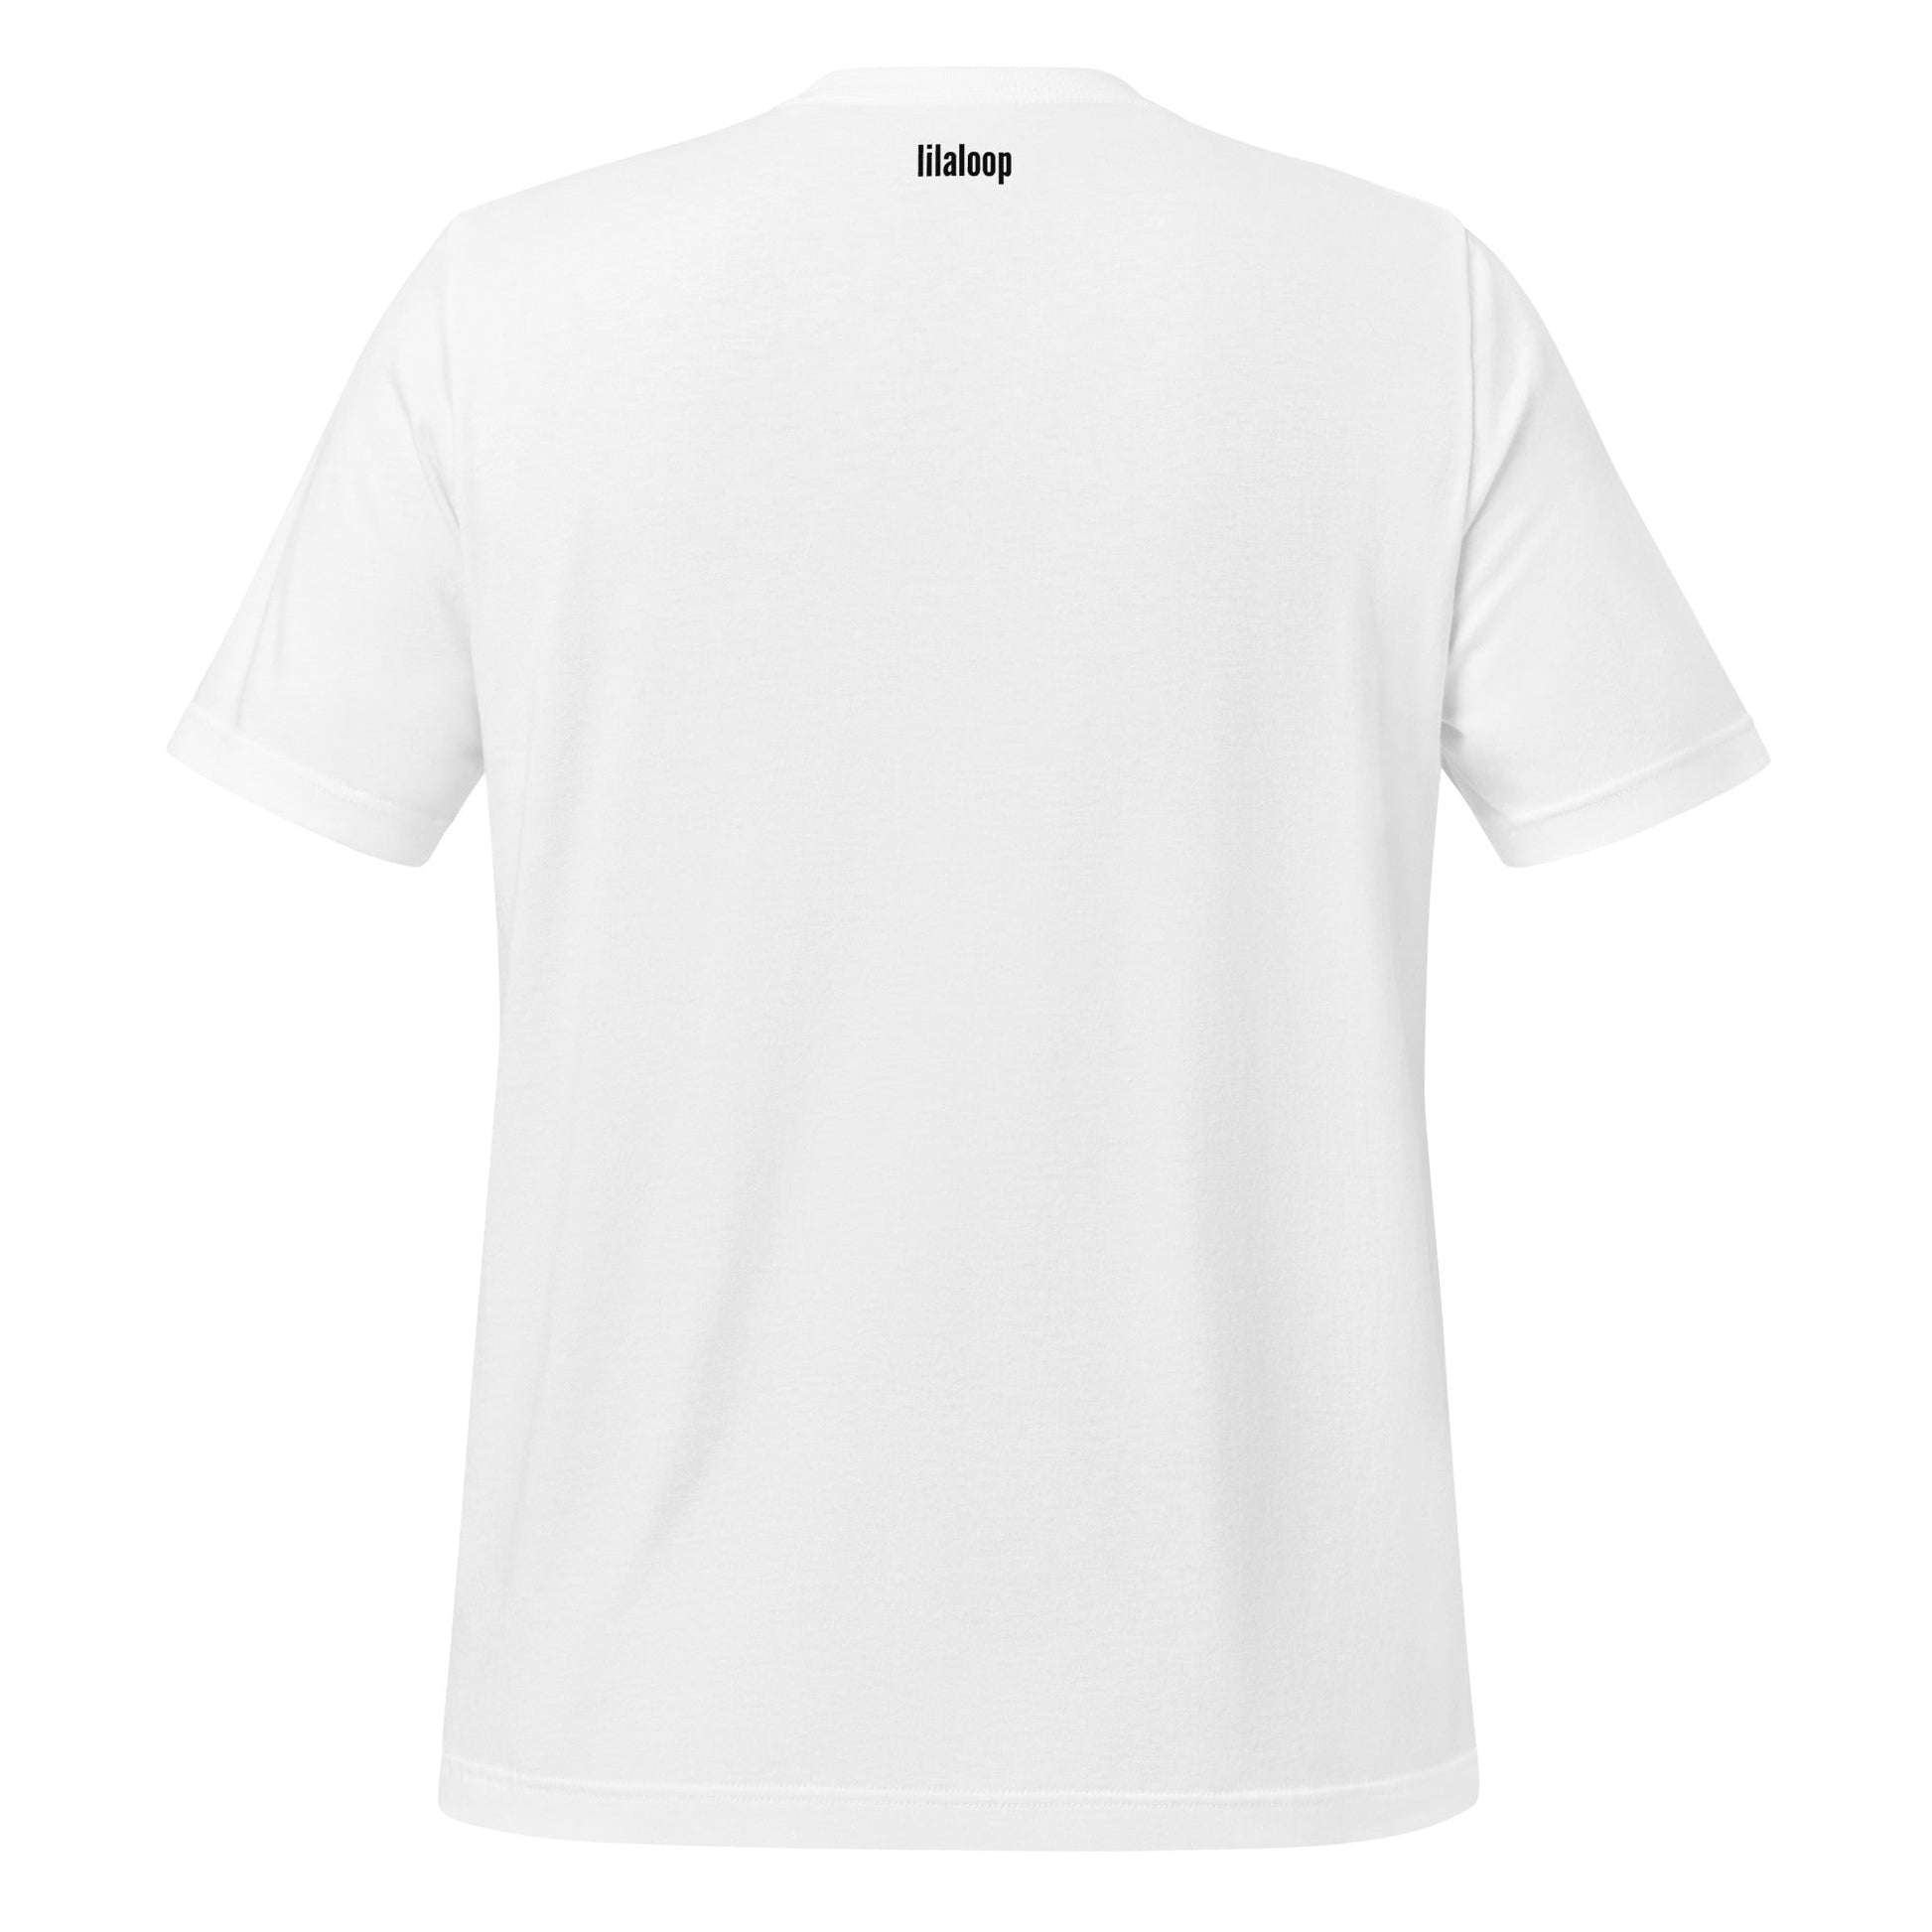 TRY-DO - Unisex t-shirt - lilaloop - T-shirt